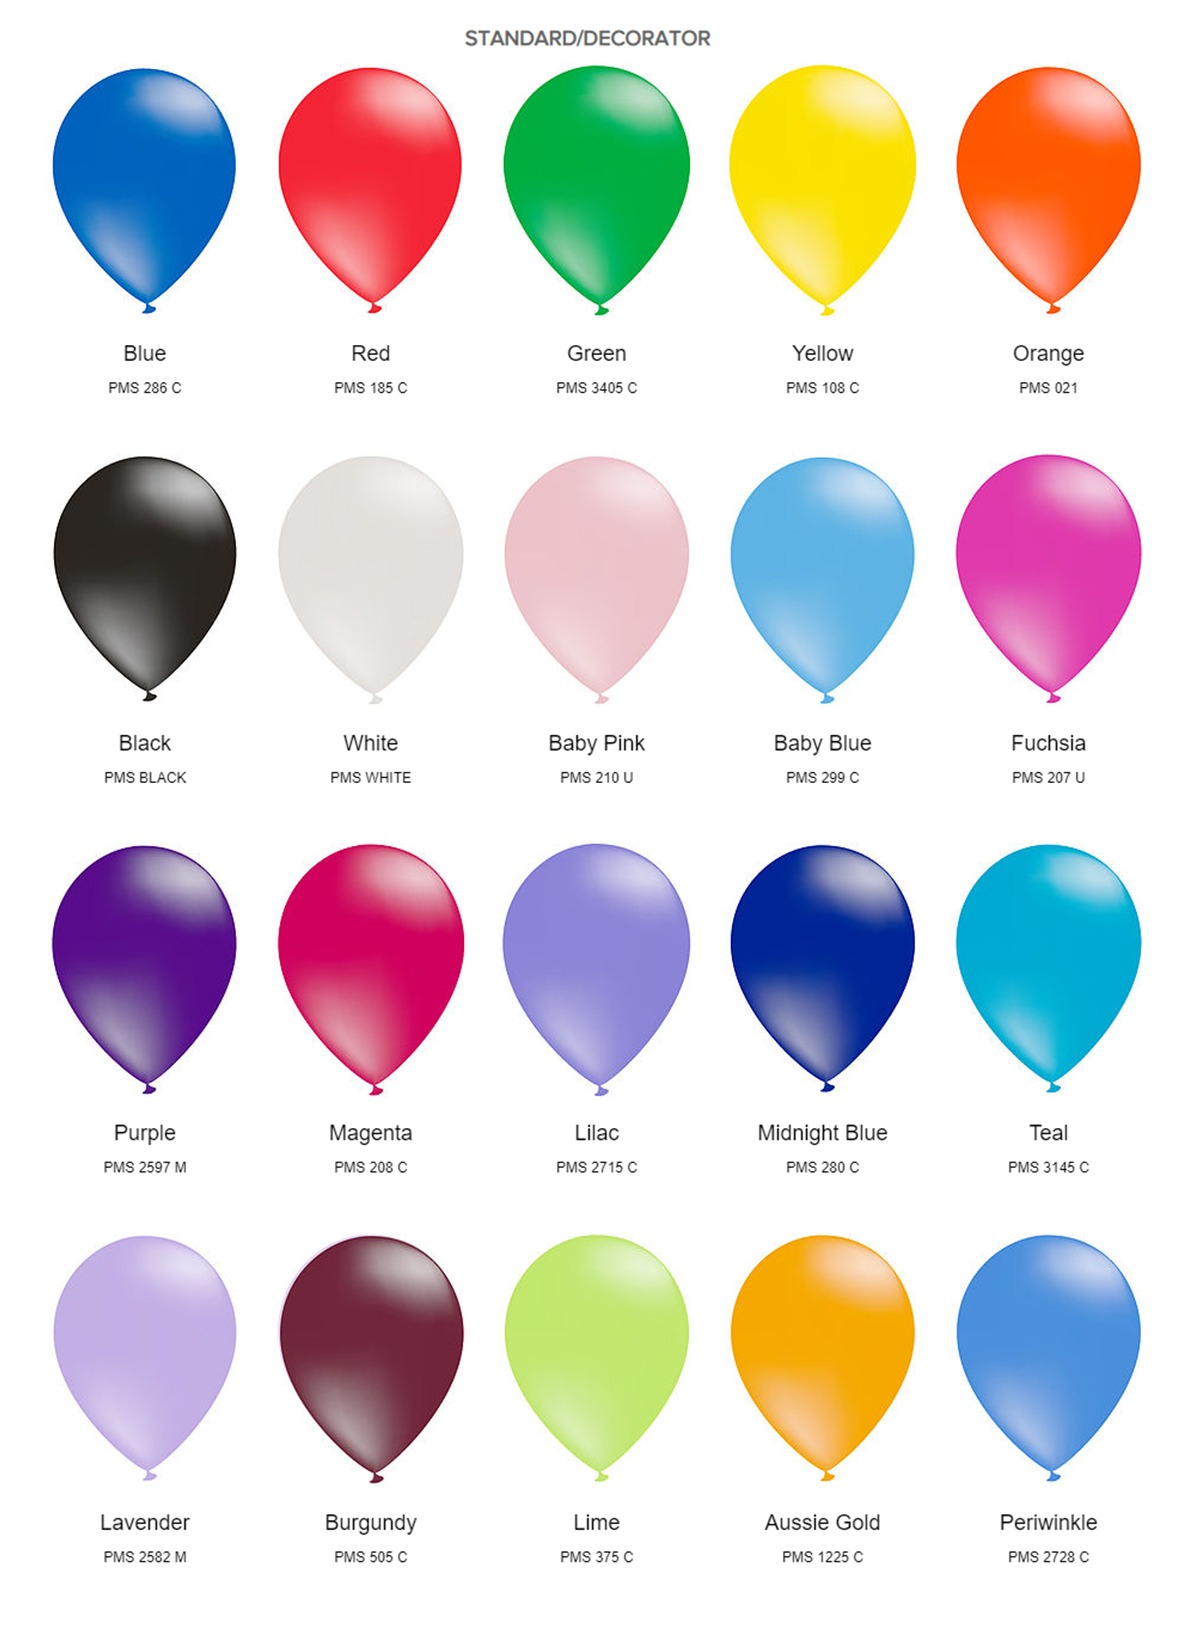 Decorator / Standard Balloons Colour Chart